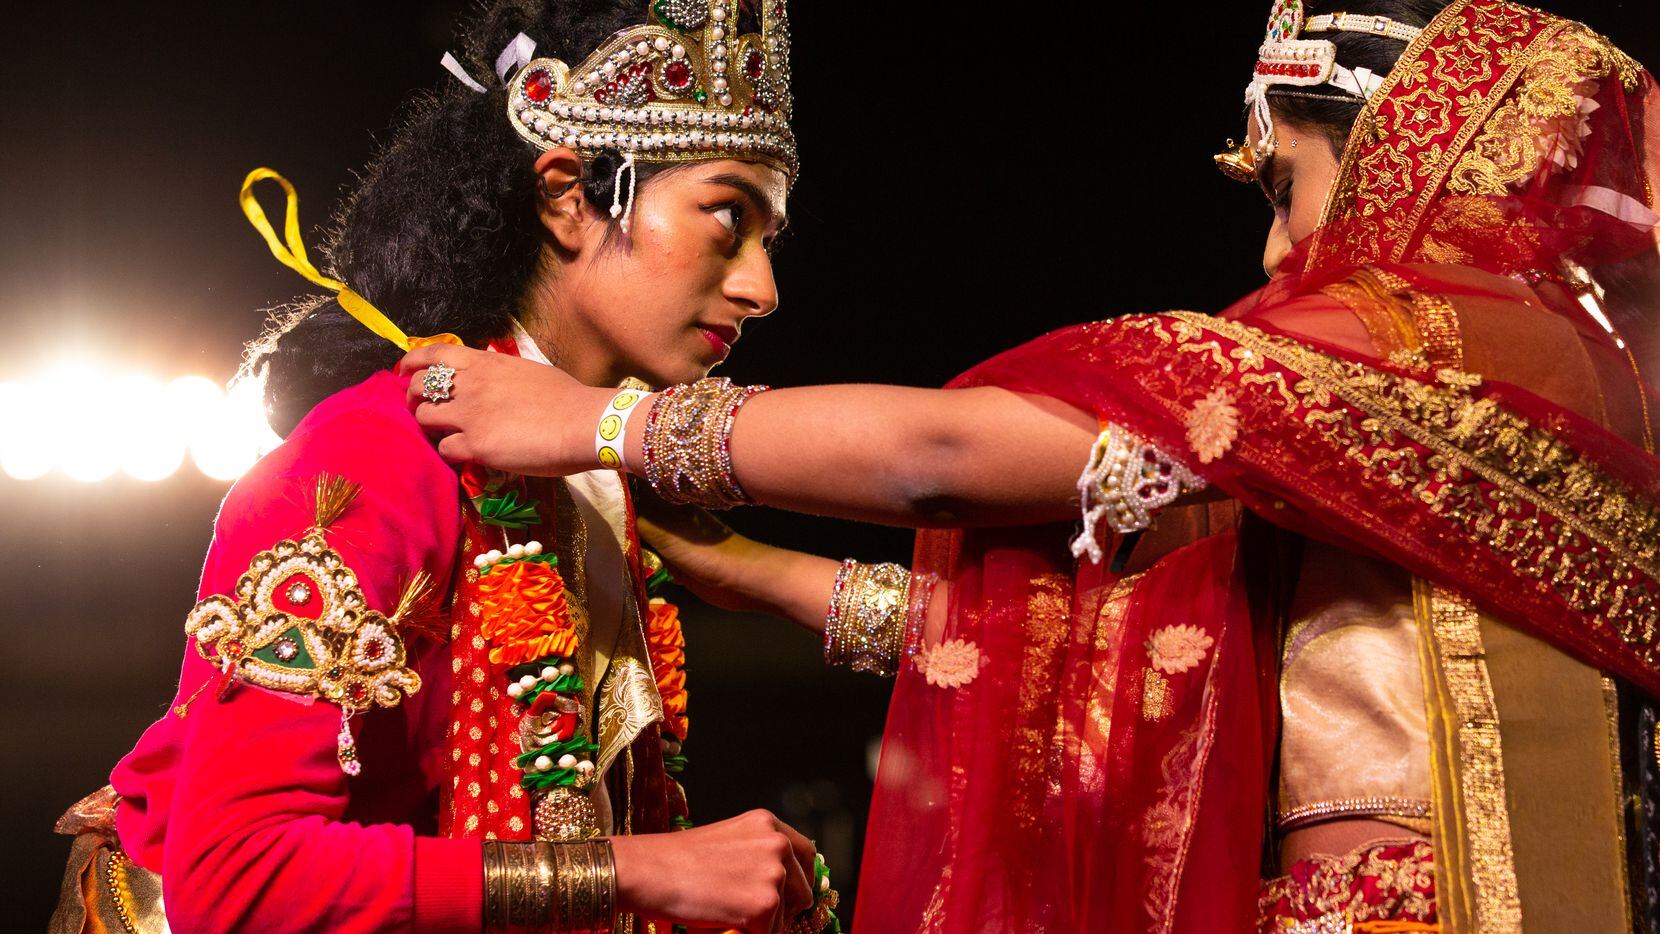 Sixteen-year-old Sanjana Shangle performs Saturday in the Ramlila, a musical drama and dance production that depicts Hindu mythology during Diwali Mela at Fair Park in Dallas.